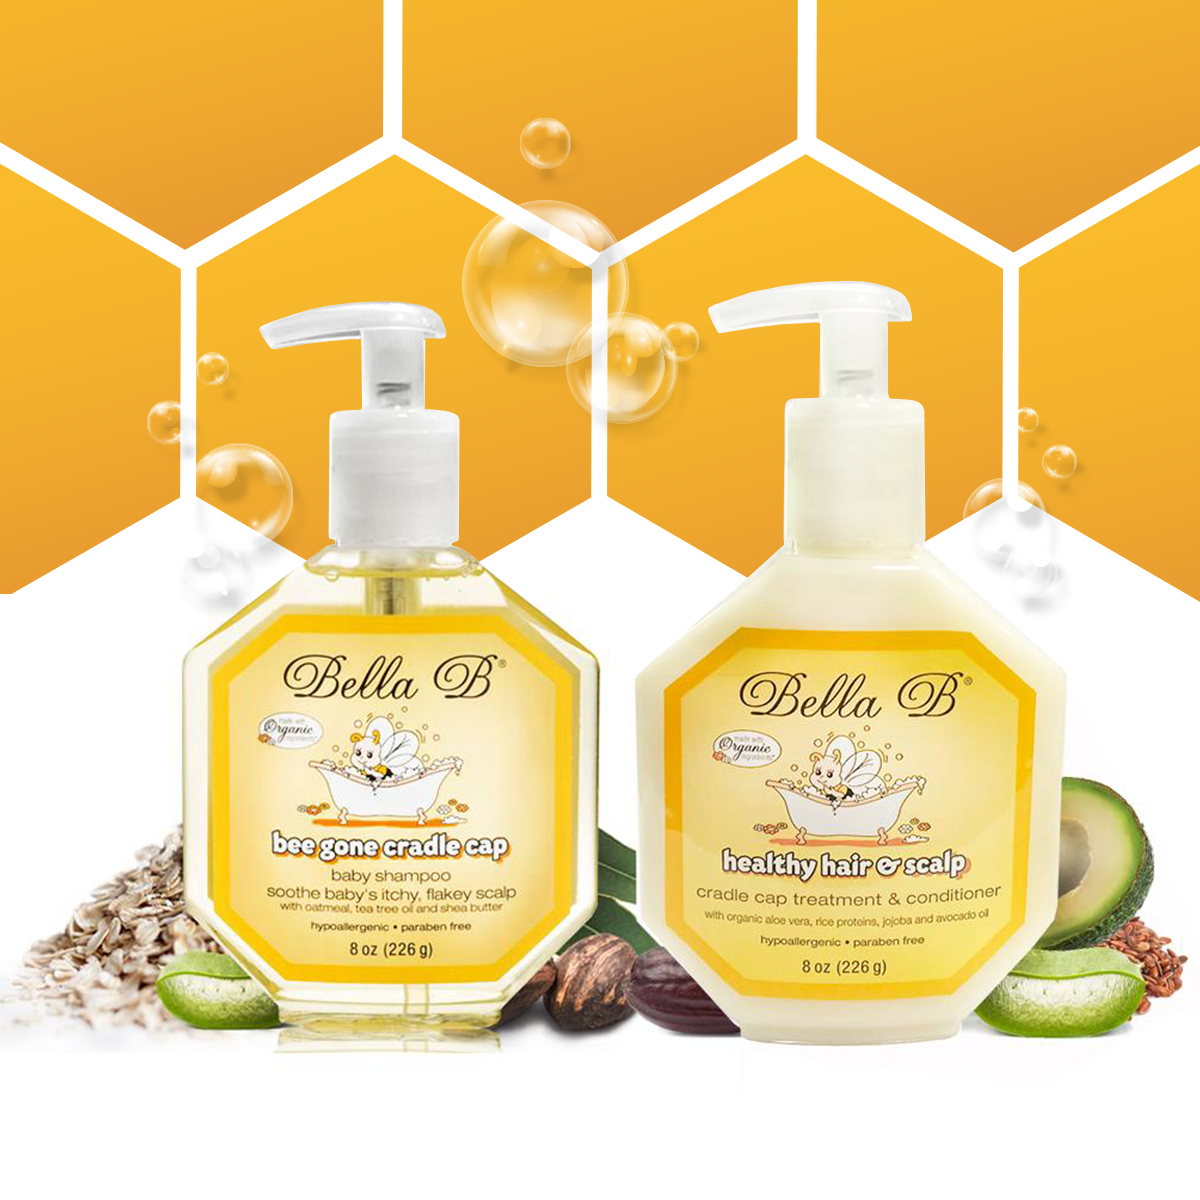 Bella B Bundle - Bee Gone Cradle Cap Shampoo and Healthy Hair & Scalp 8oz